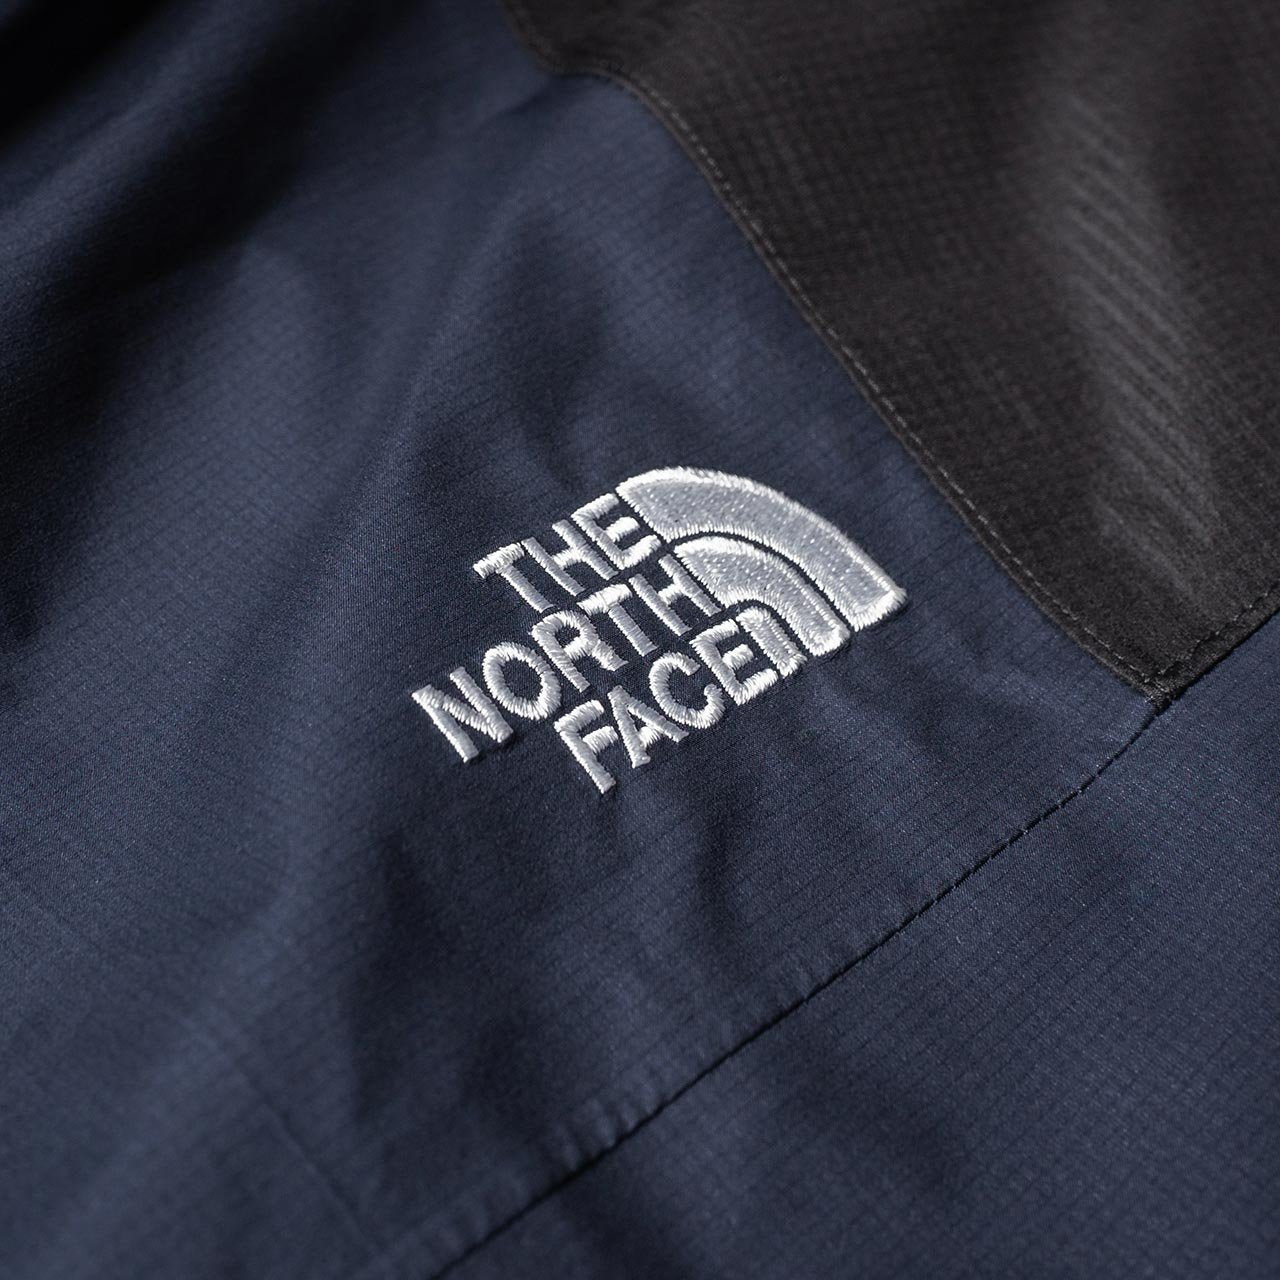 the north face black series kk gore-tex light coat jacket (black) - nf0a3vqh2g - a.plus - Image - 10